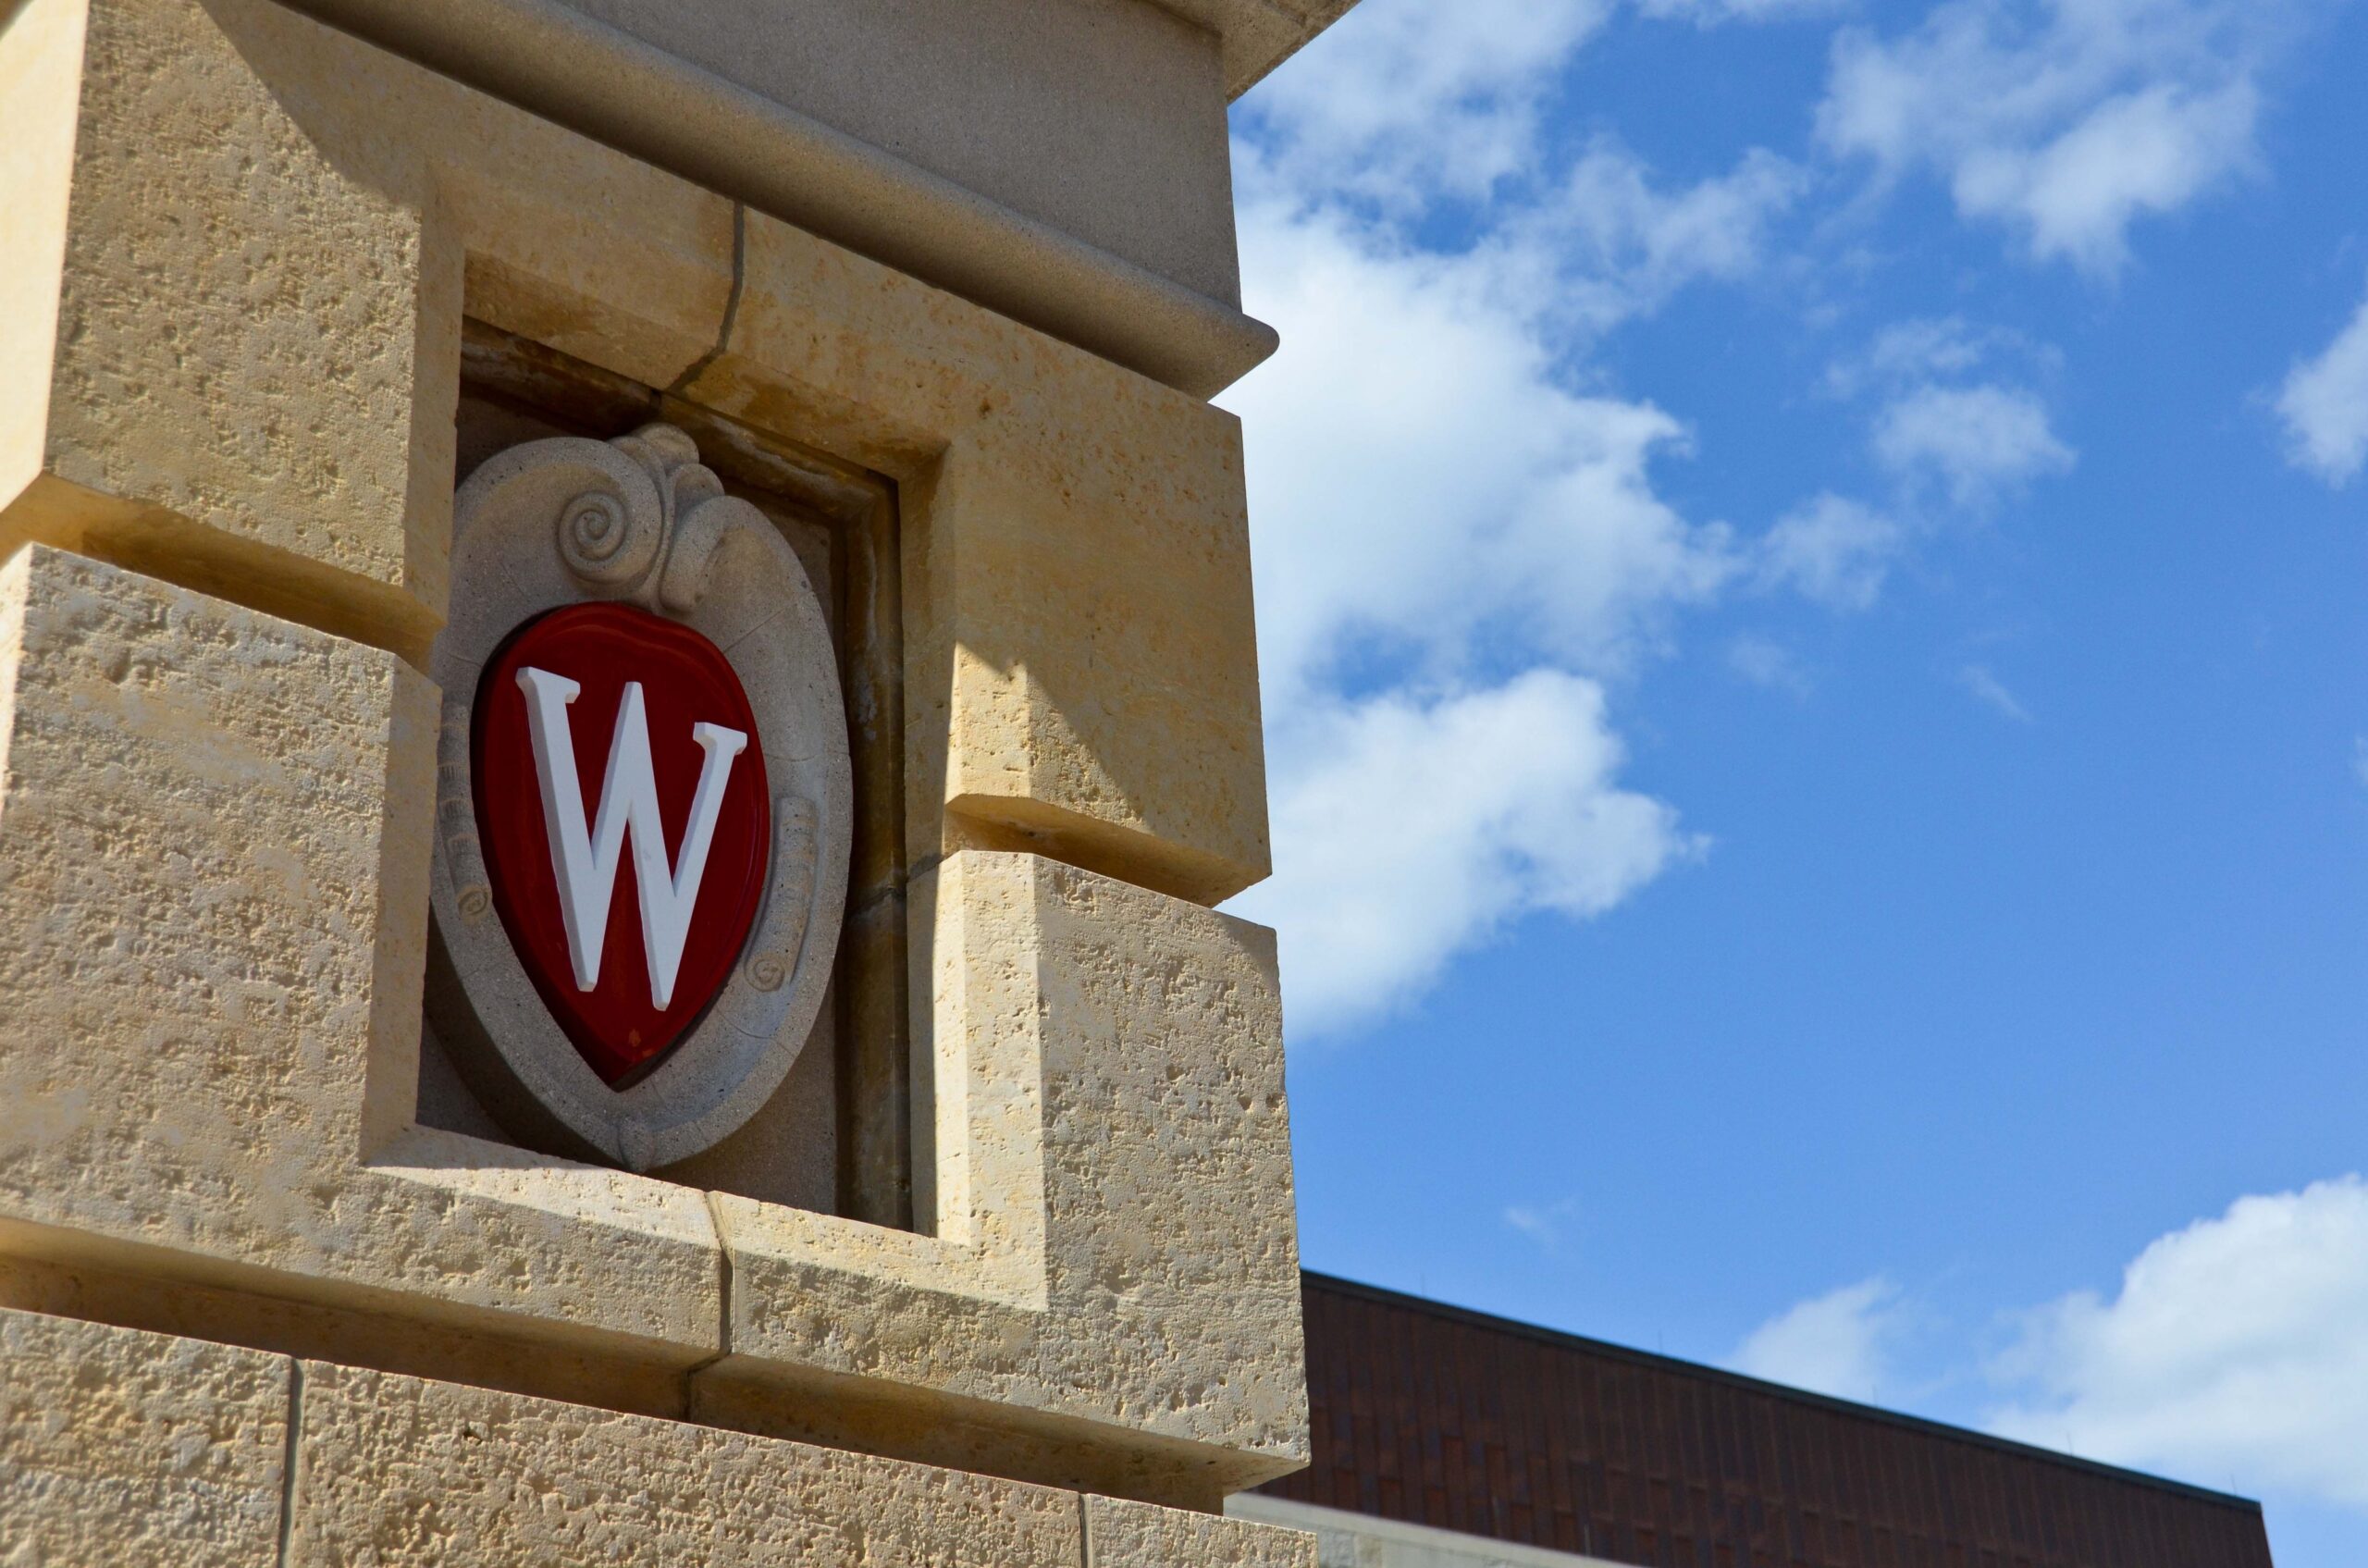 University of Wisconsin shield